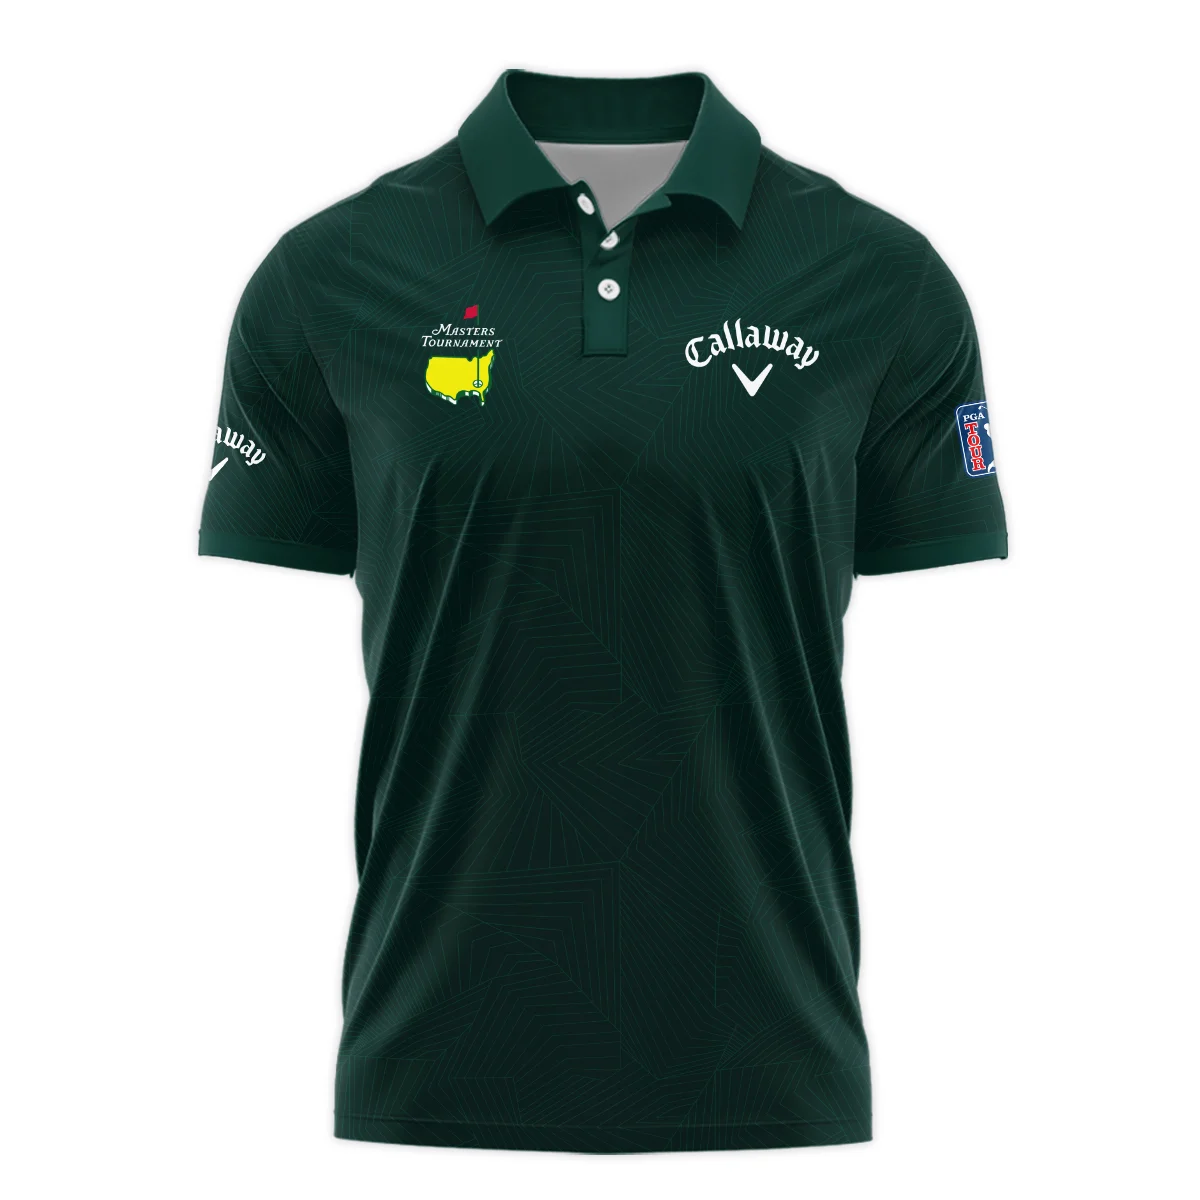 Masters Tournament Callaway Pattern Sport Jersey Dark Green Vneck Long Polo Shirt Style Classic Long Polo Shirt For Men